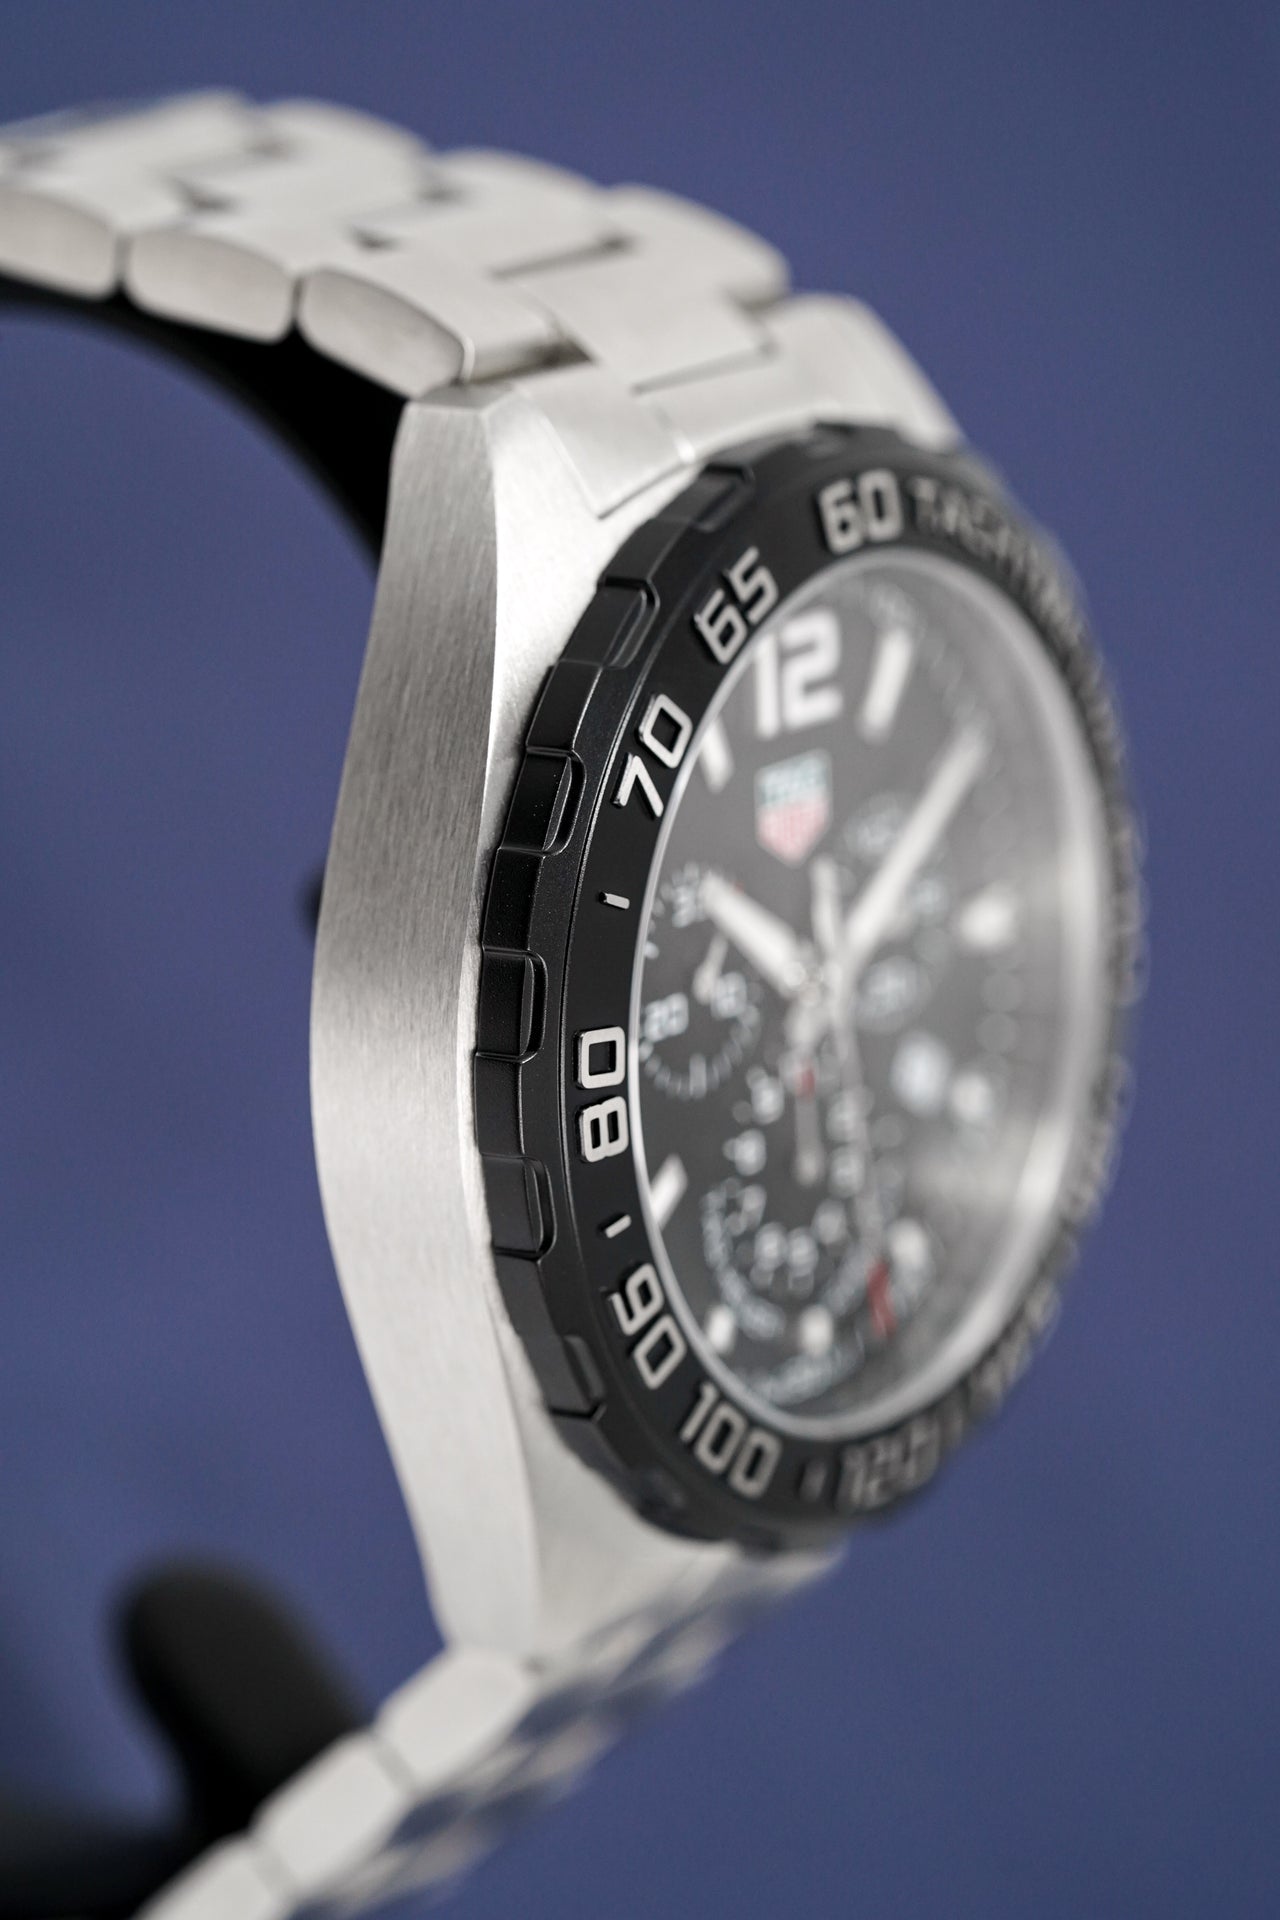 Tag Heuer Formula 1 Chronograph Black Dial Men's Watch CAZ1010.BA0842